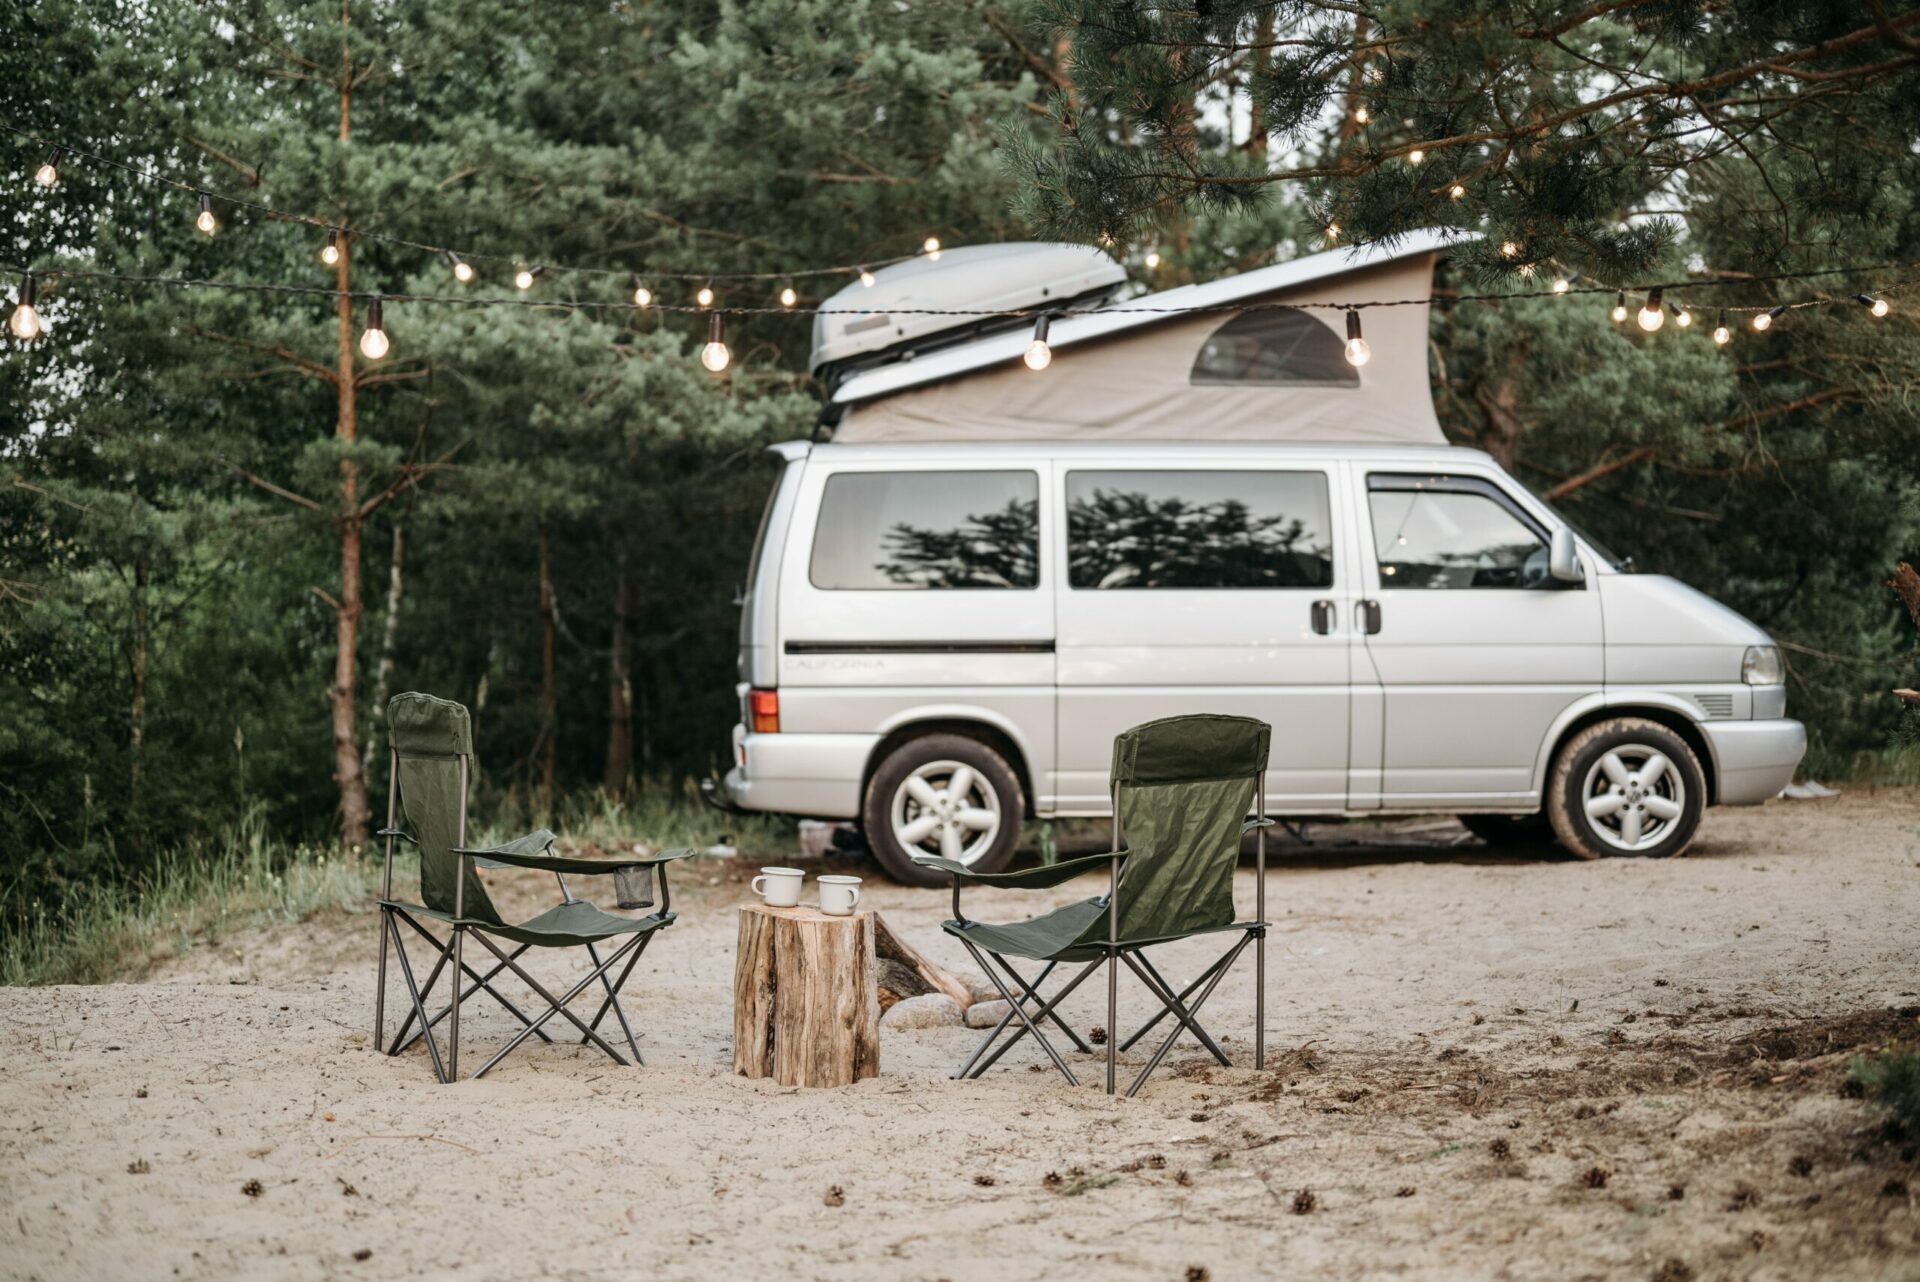 Camperiza tu furgoneta | camperizar tu furgoneta,muebles camper,camperización,furgón camper | Fabrilis estudio